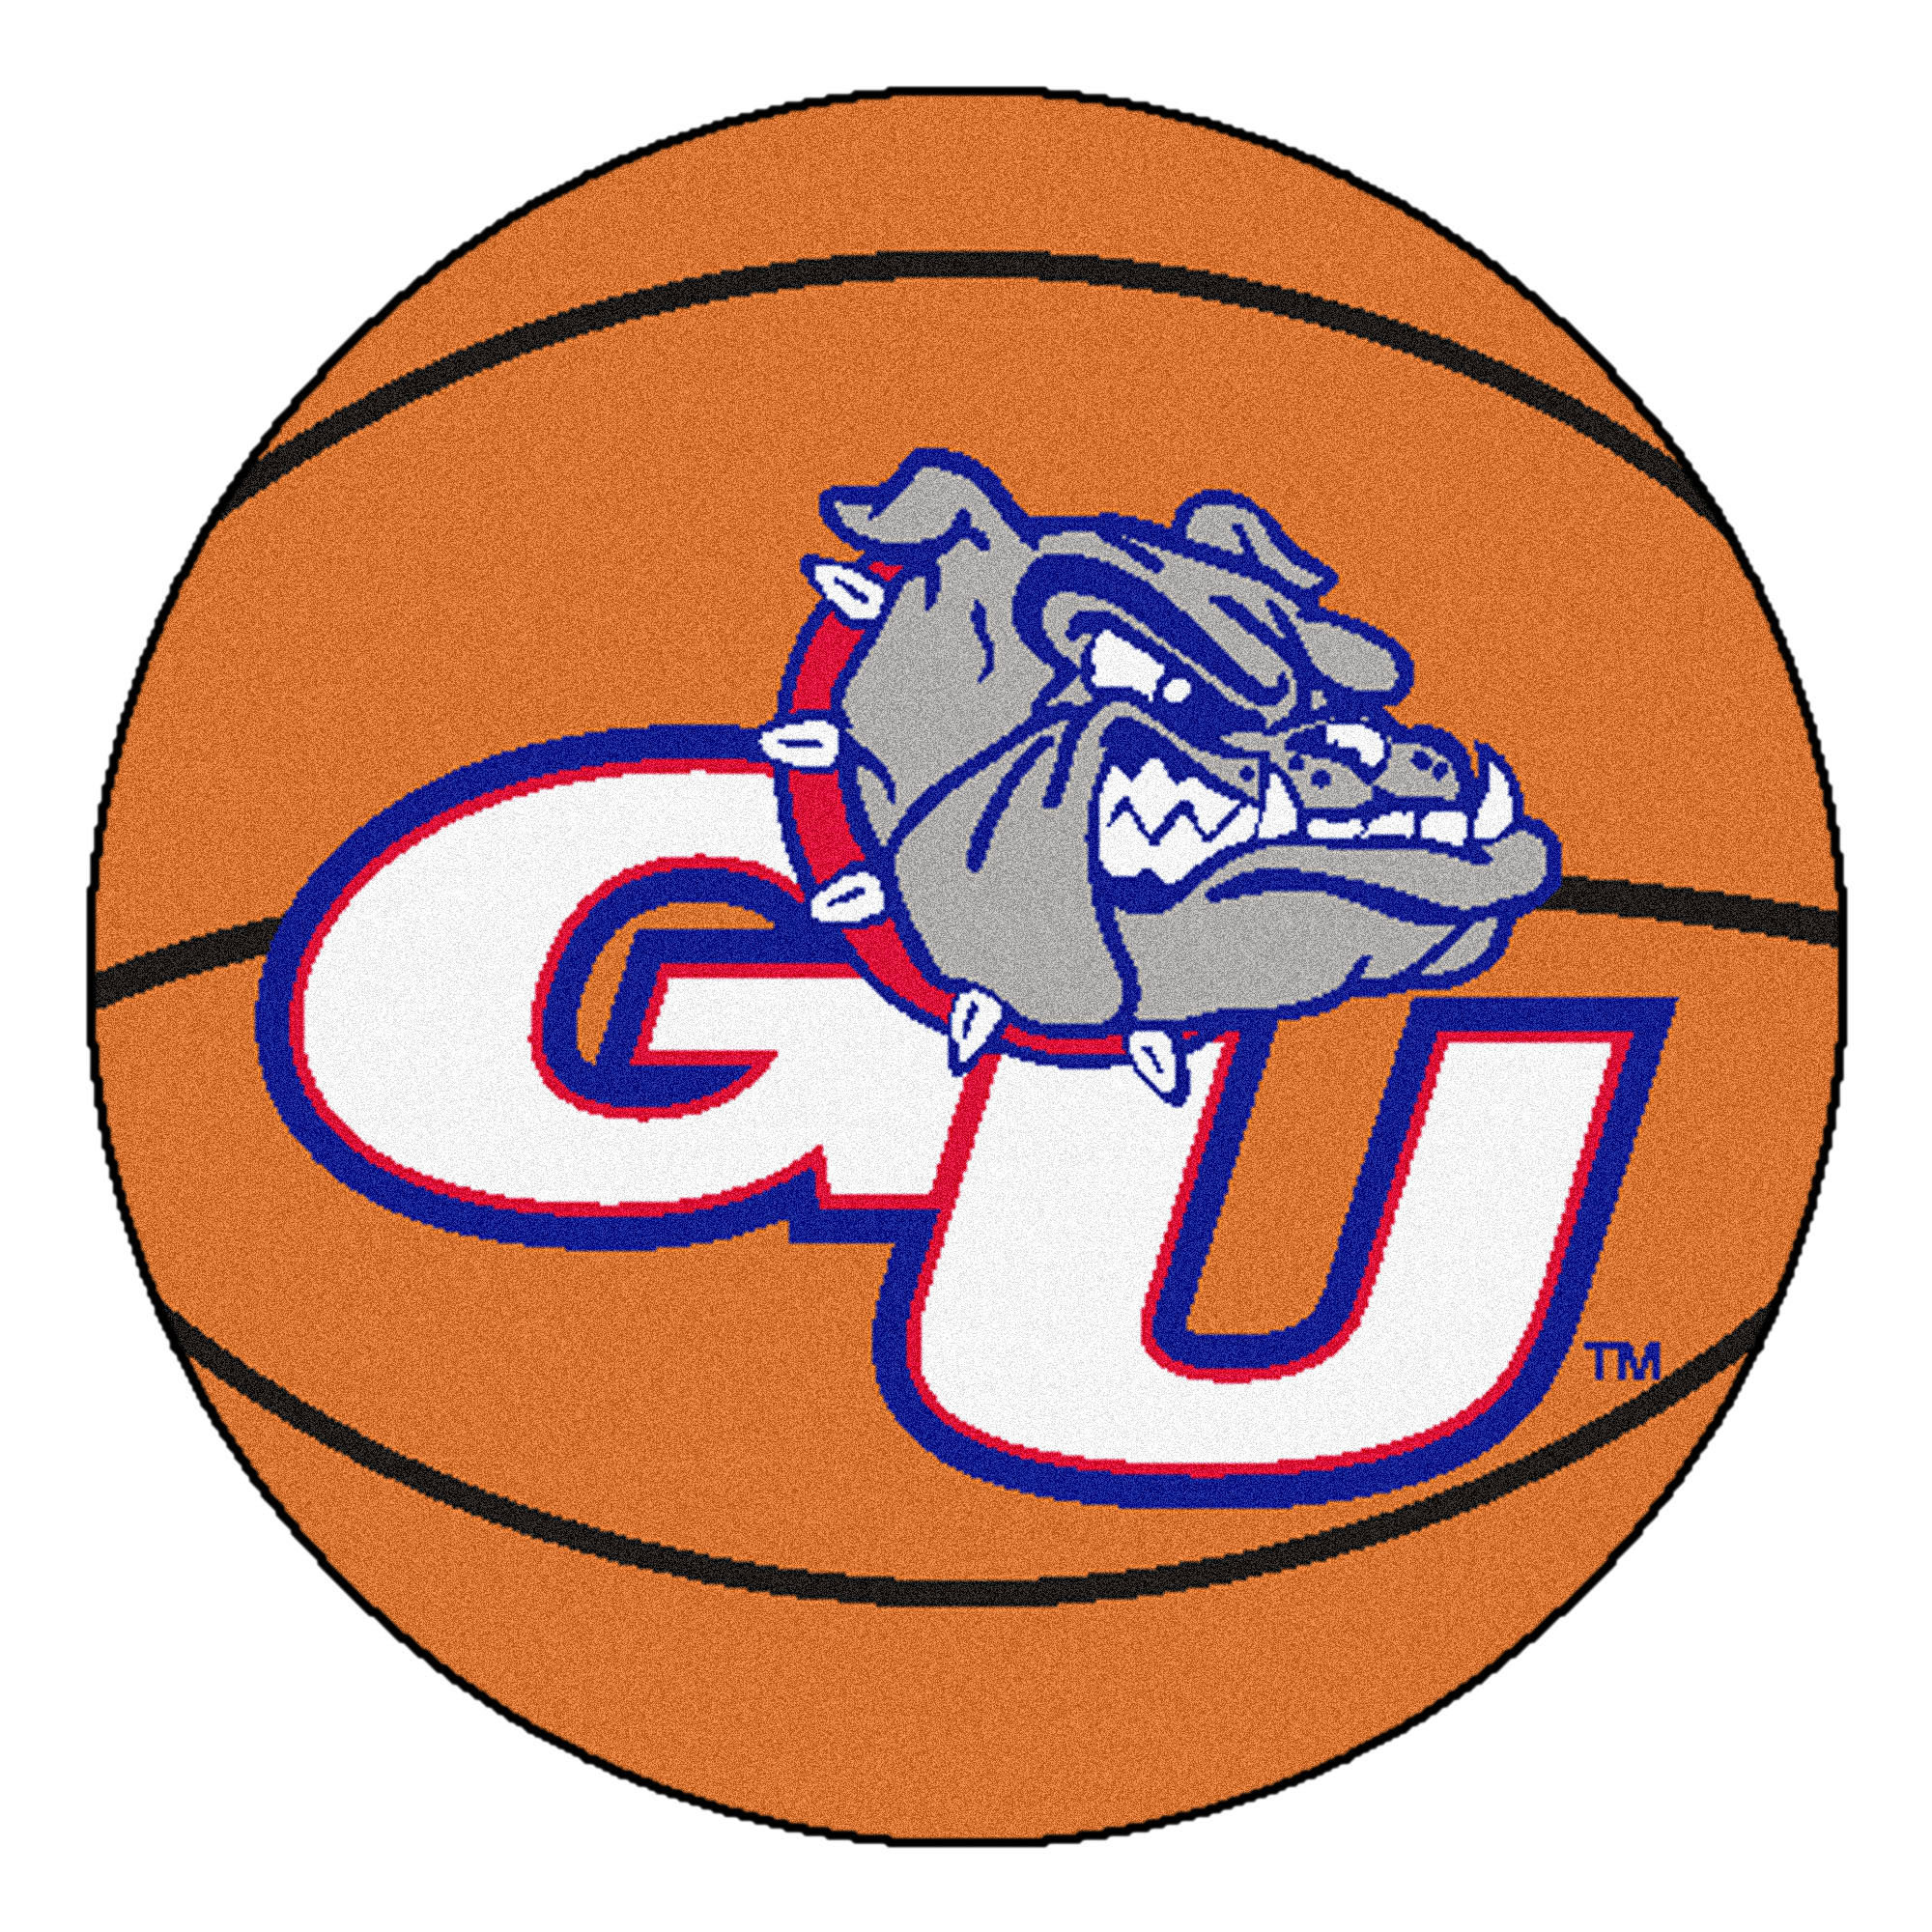 Gonzaga University Basketball / Men S Basketball Ticket Information